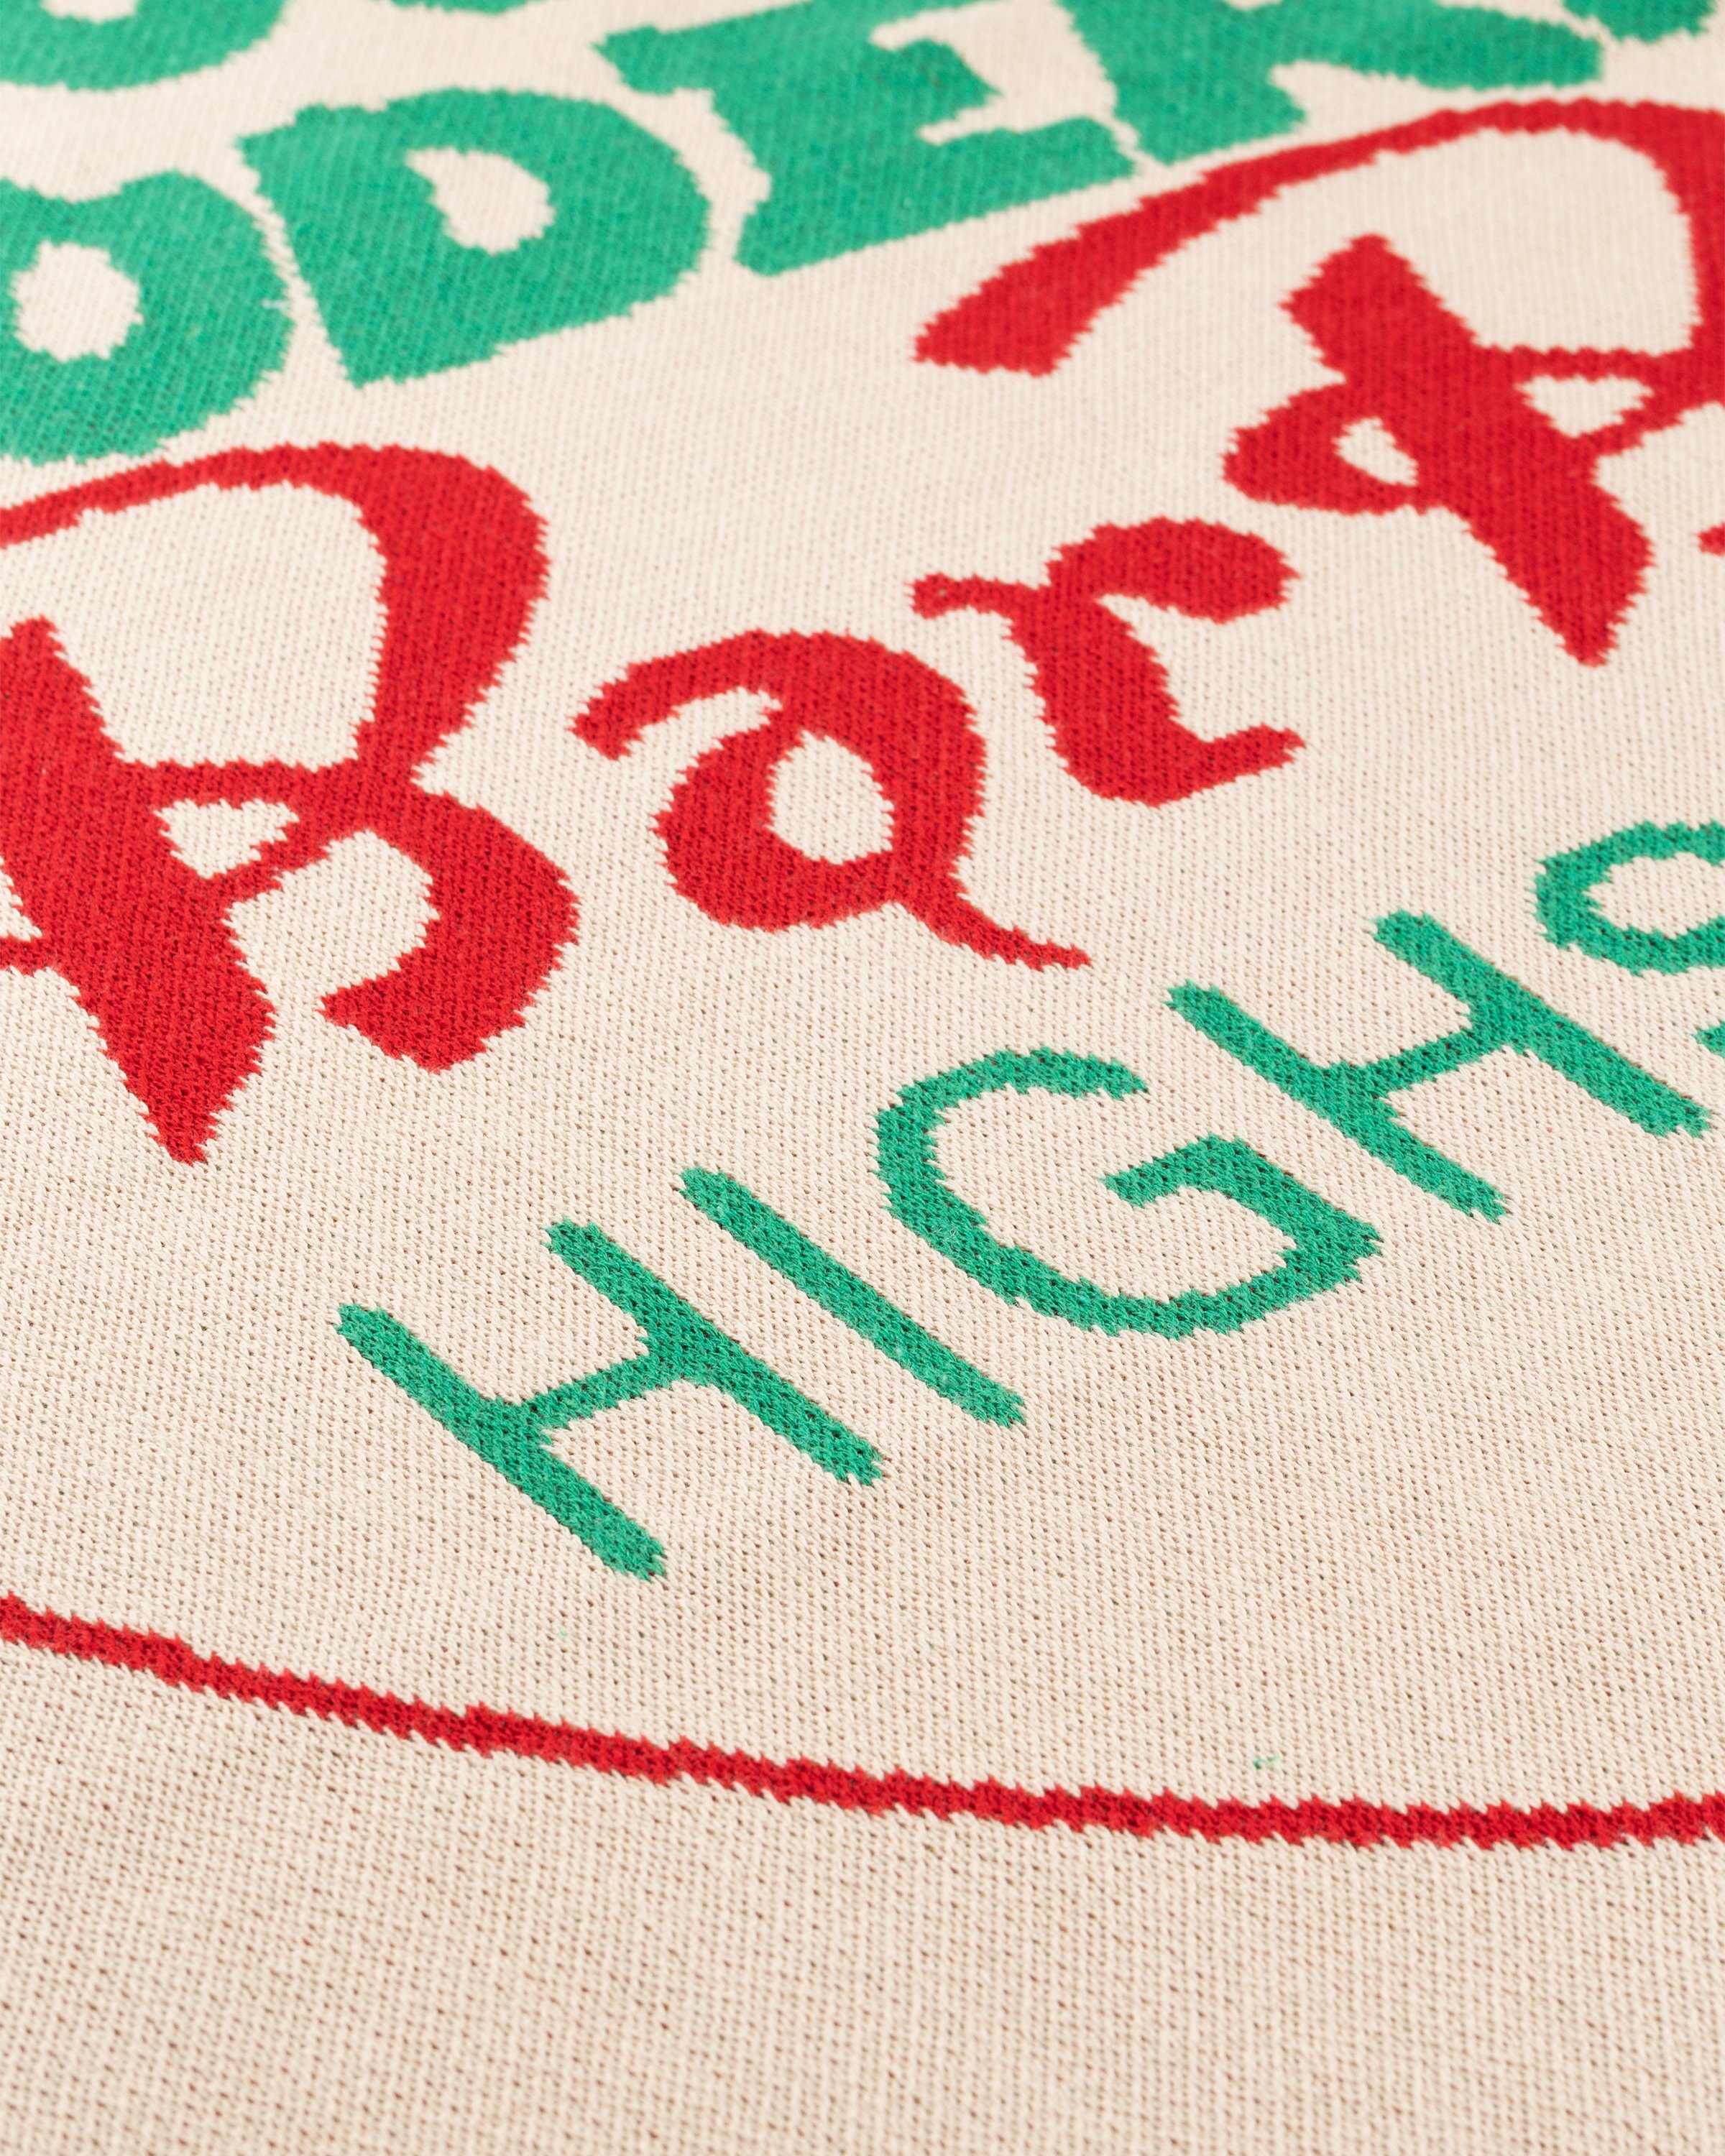 Bar Basso x Highsnobiety - Graphic Blanket - Lifestyle - Beige - Image 3